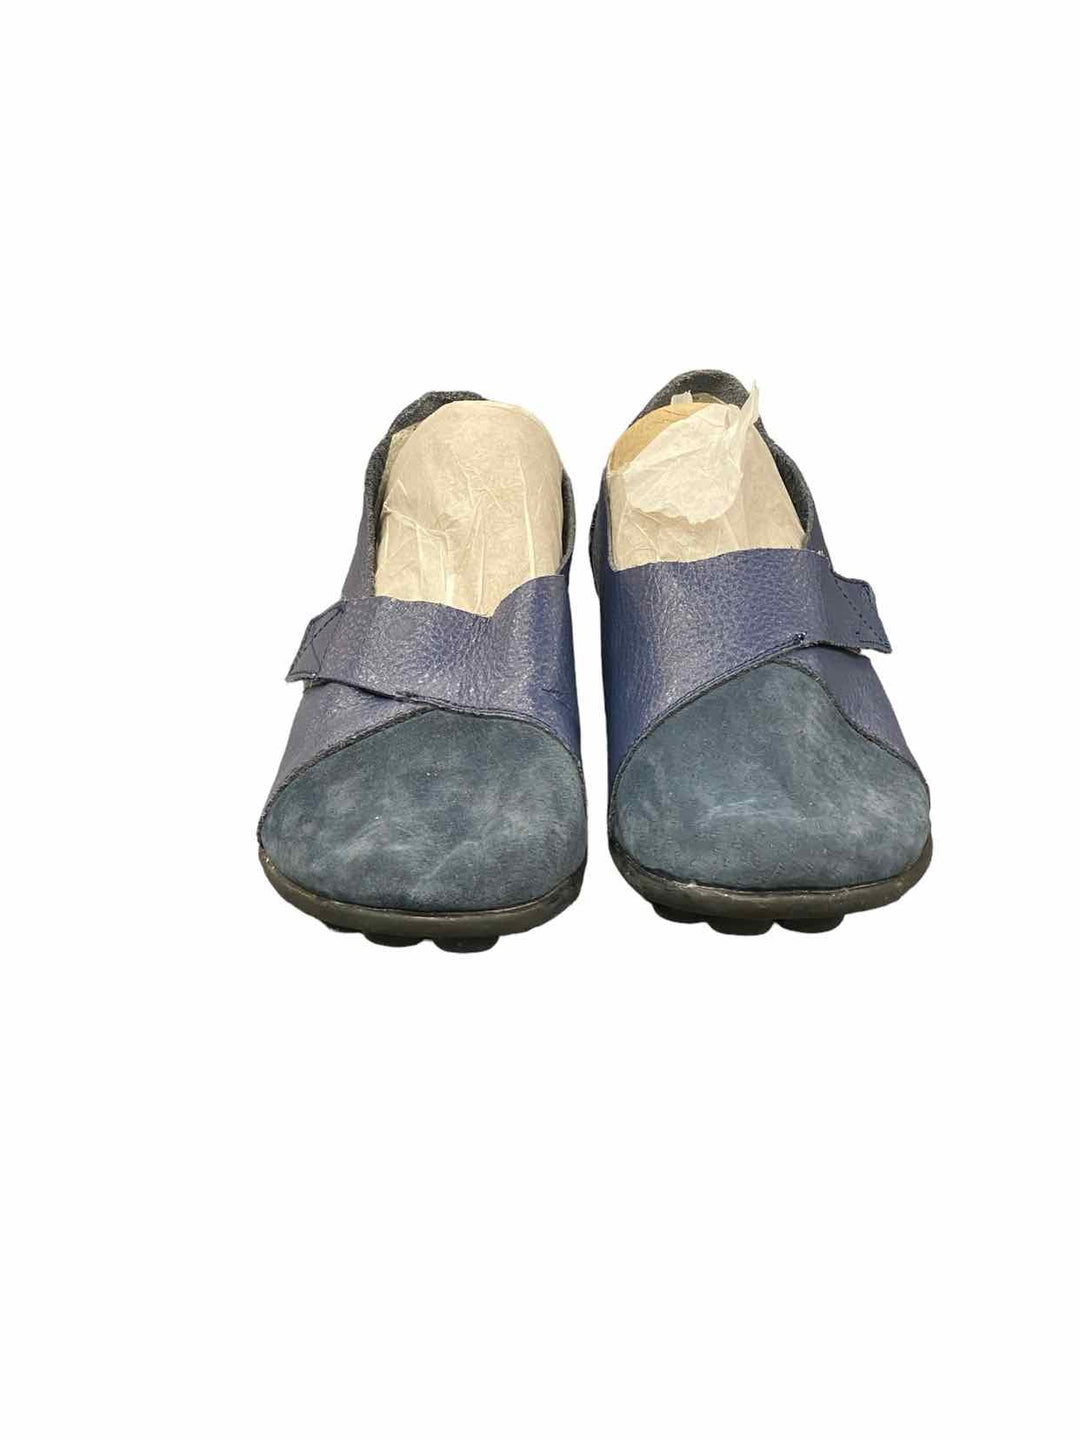 Unknown Shoe Size 37 Blue Flats